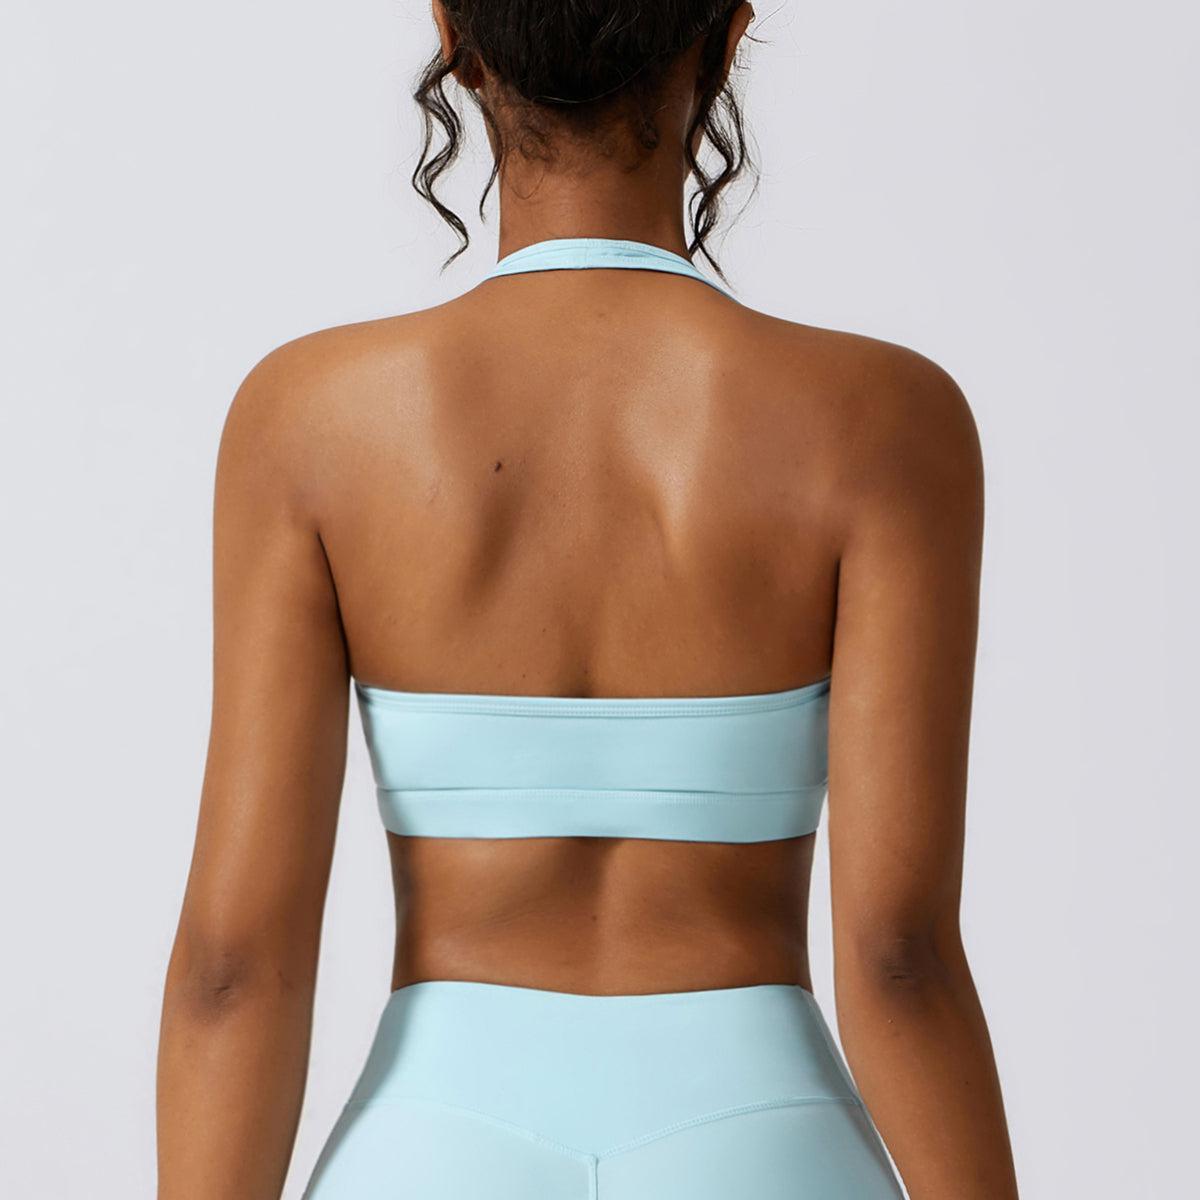 the back of a woman wearing a light blue sports bra